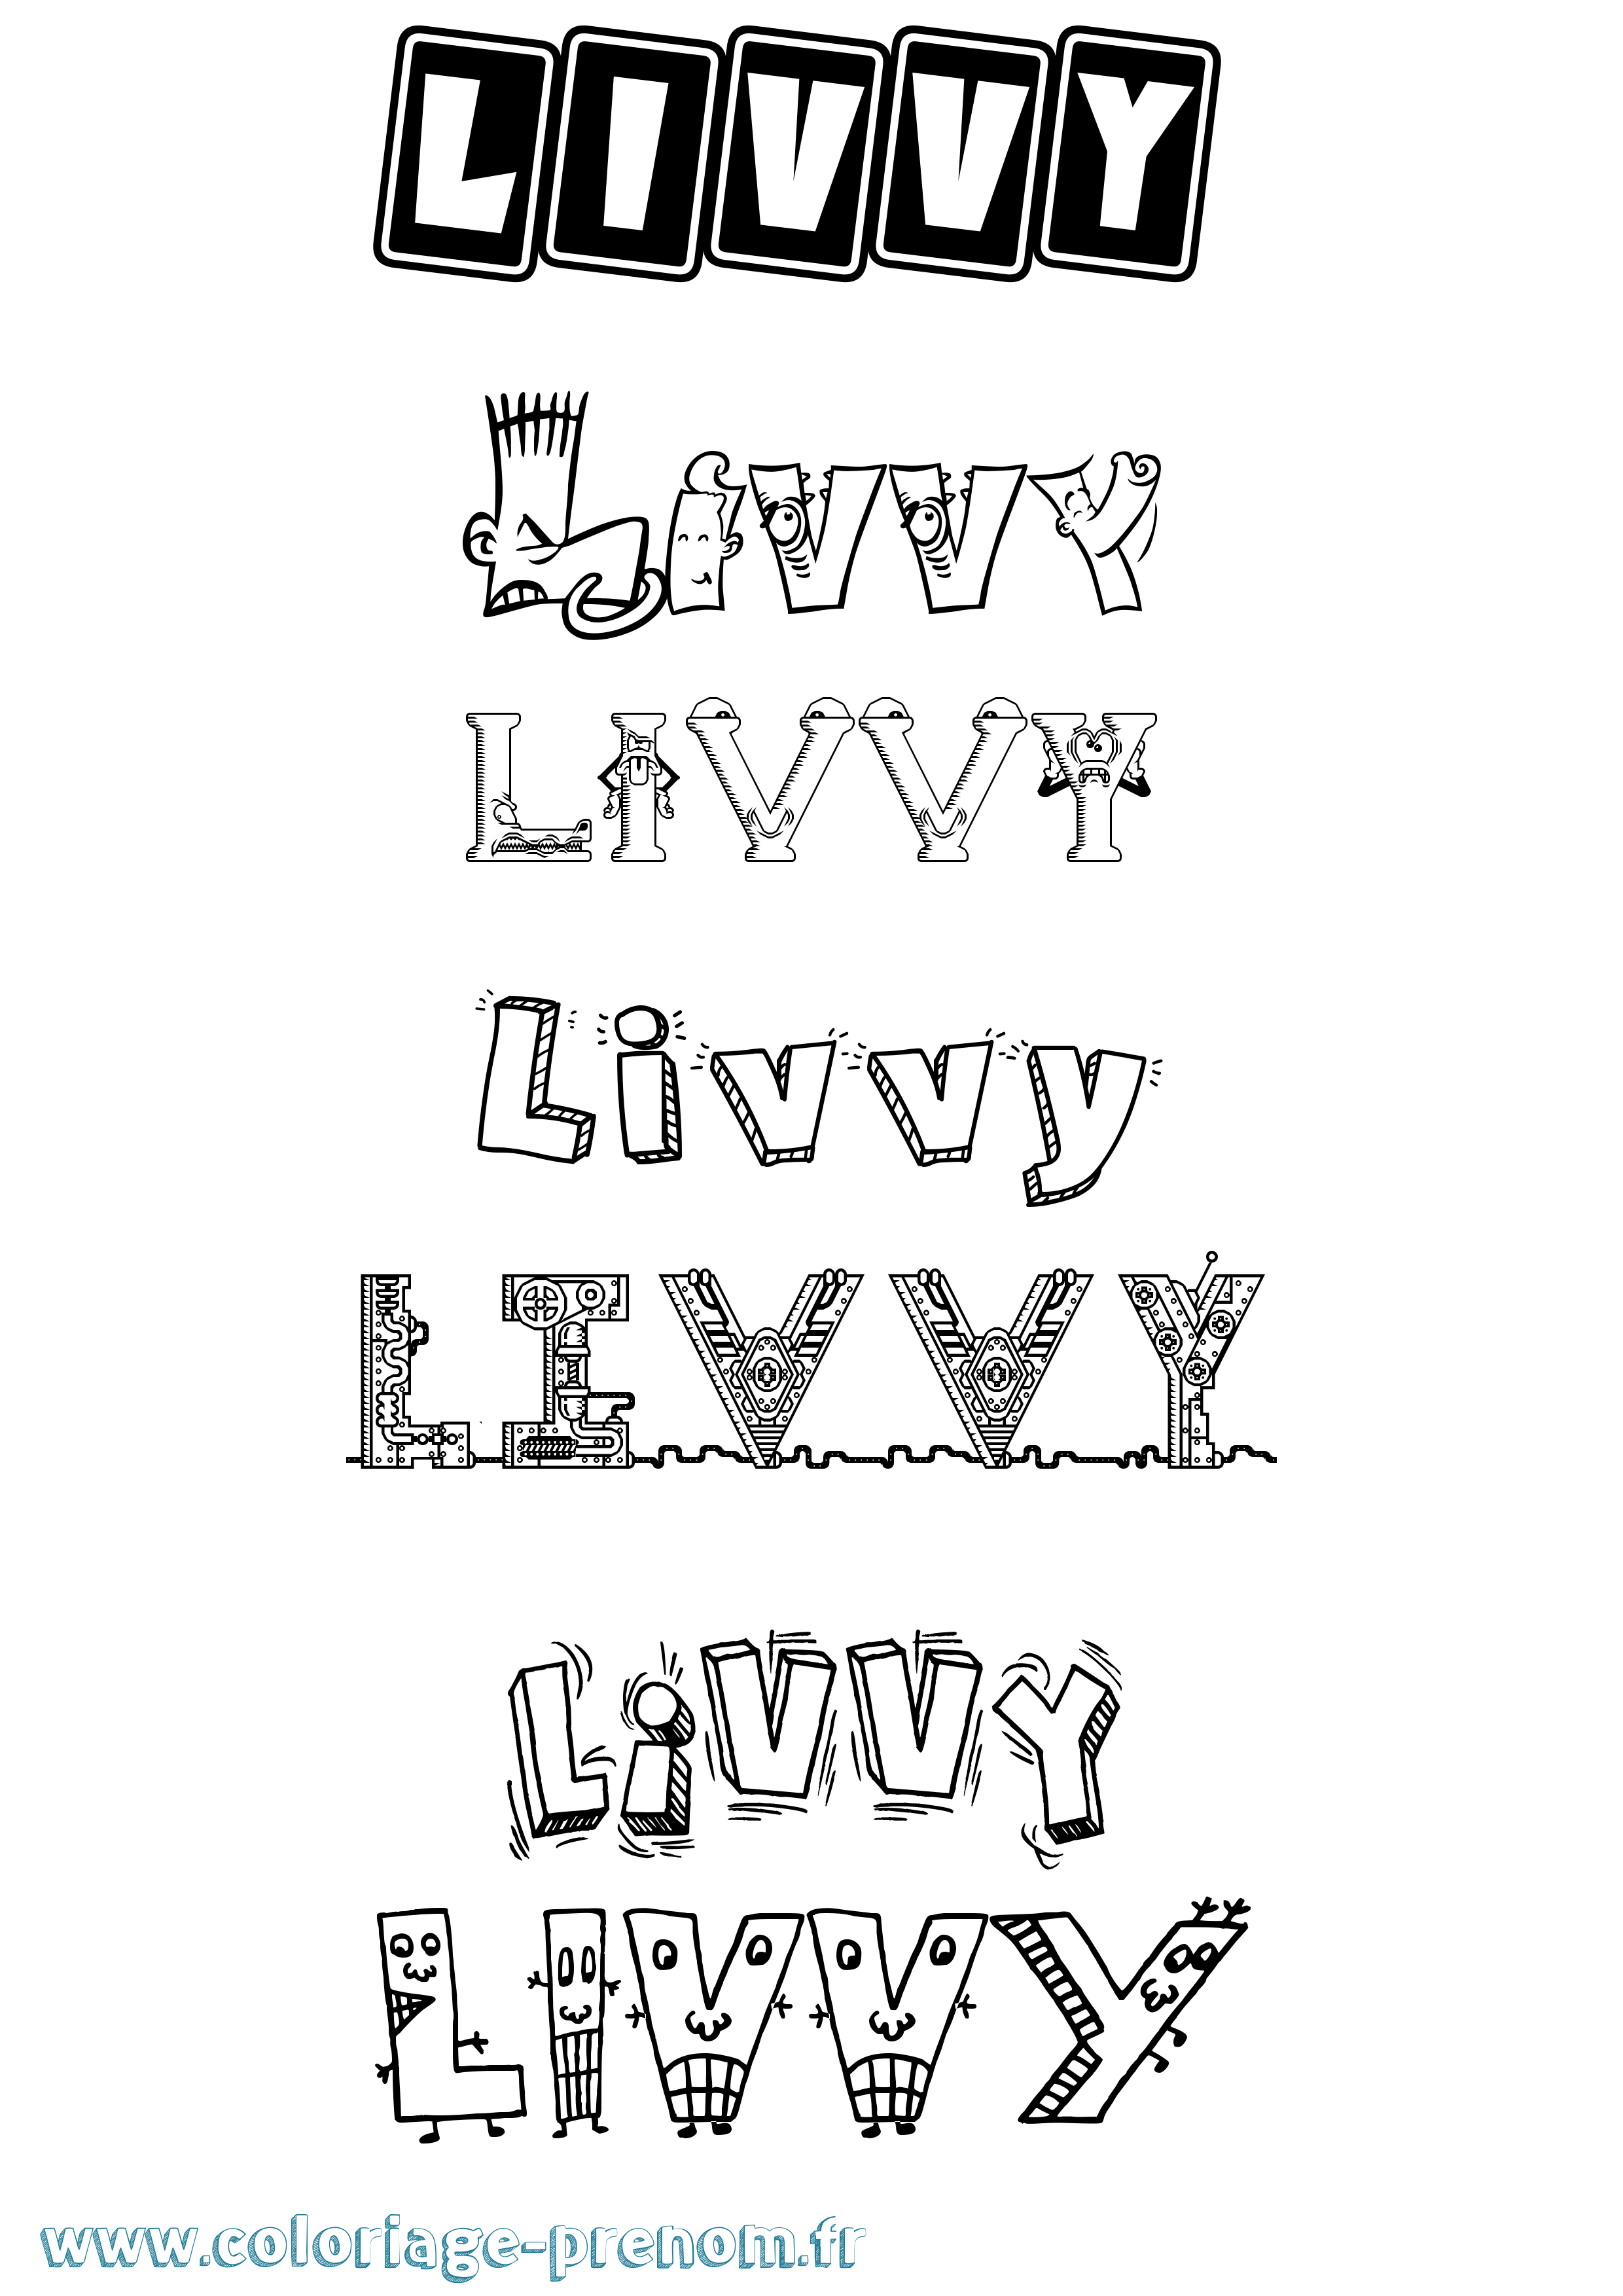 Coloriage prénom Livvy Fun